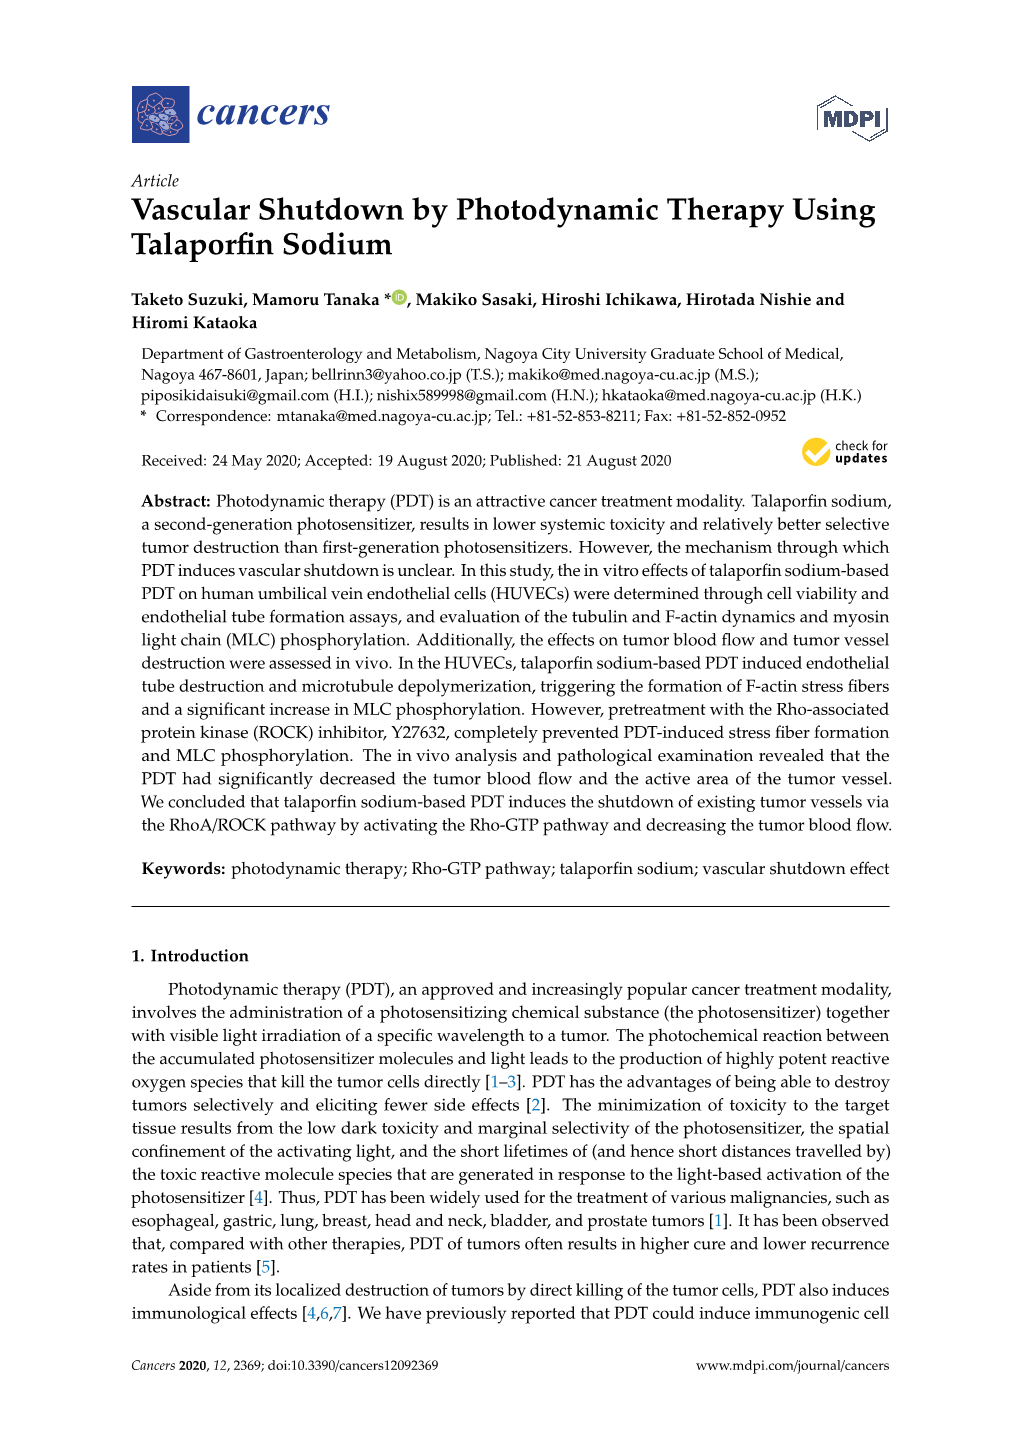 Vascular Shutdown by Photodynamic Therapy Using Talaporfin Sodium